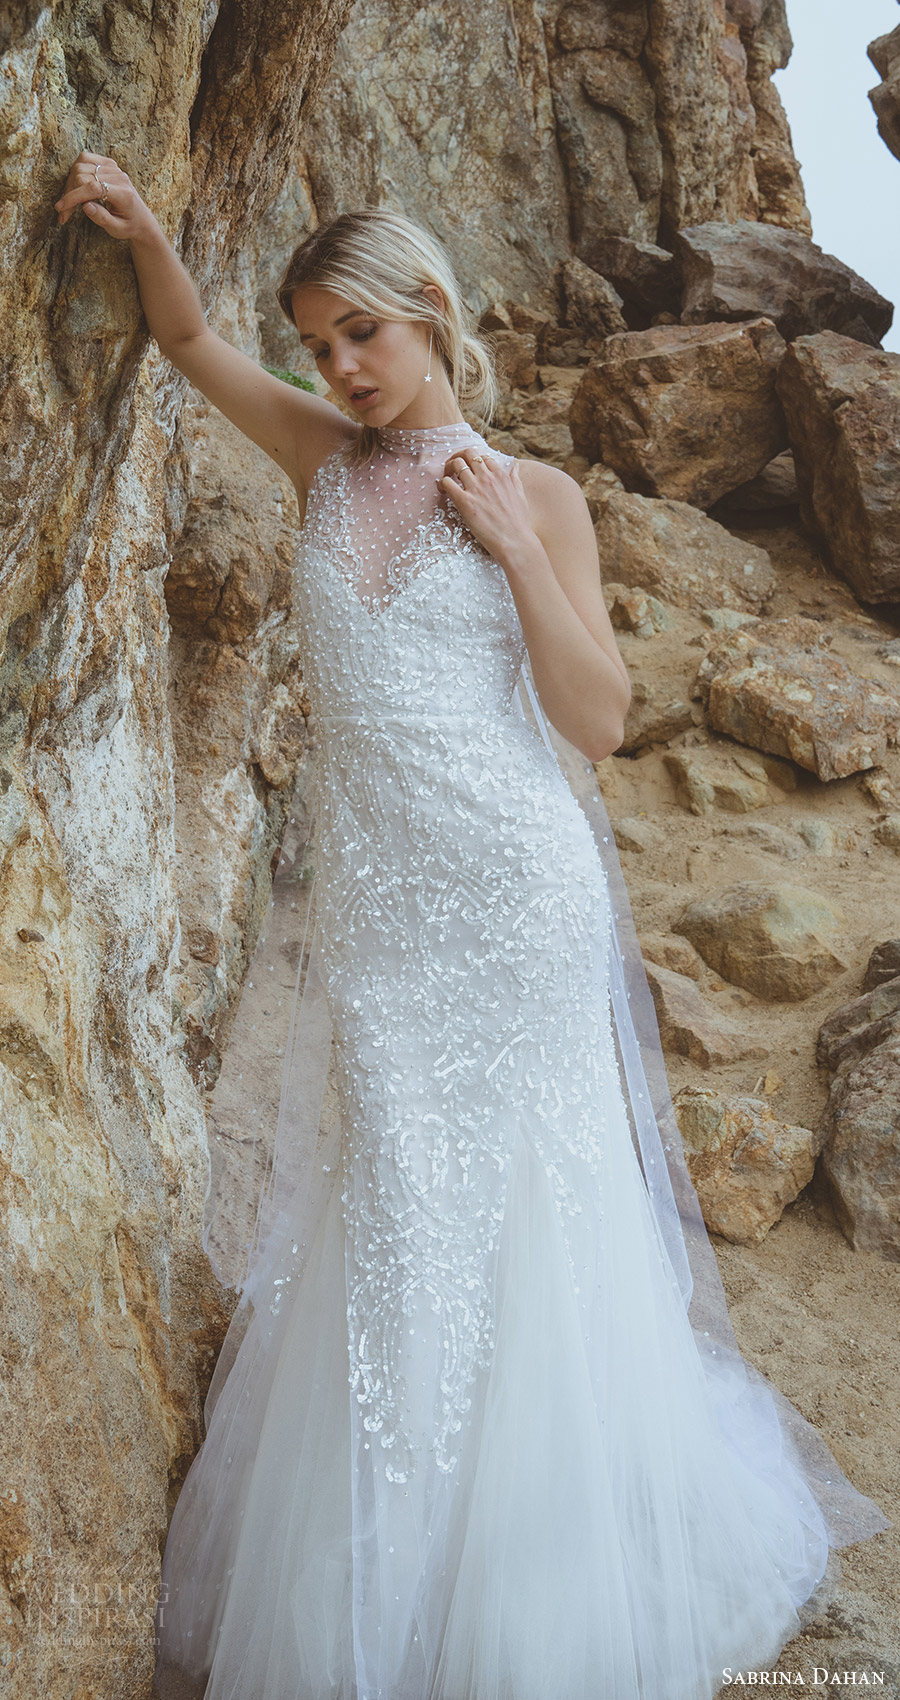 sabrina dahan spring 2018 bridal sleeveless illusion high neck heavily embellished trumpet wedding dress godet skirt (lorainne) mv romantic elegant